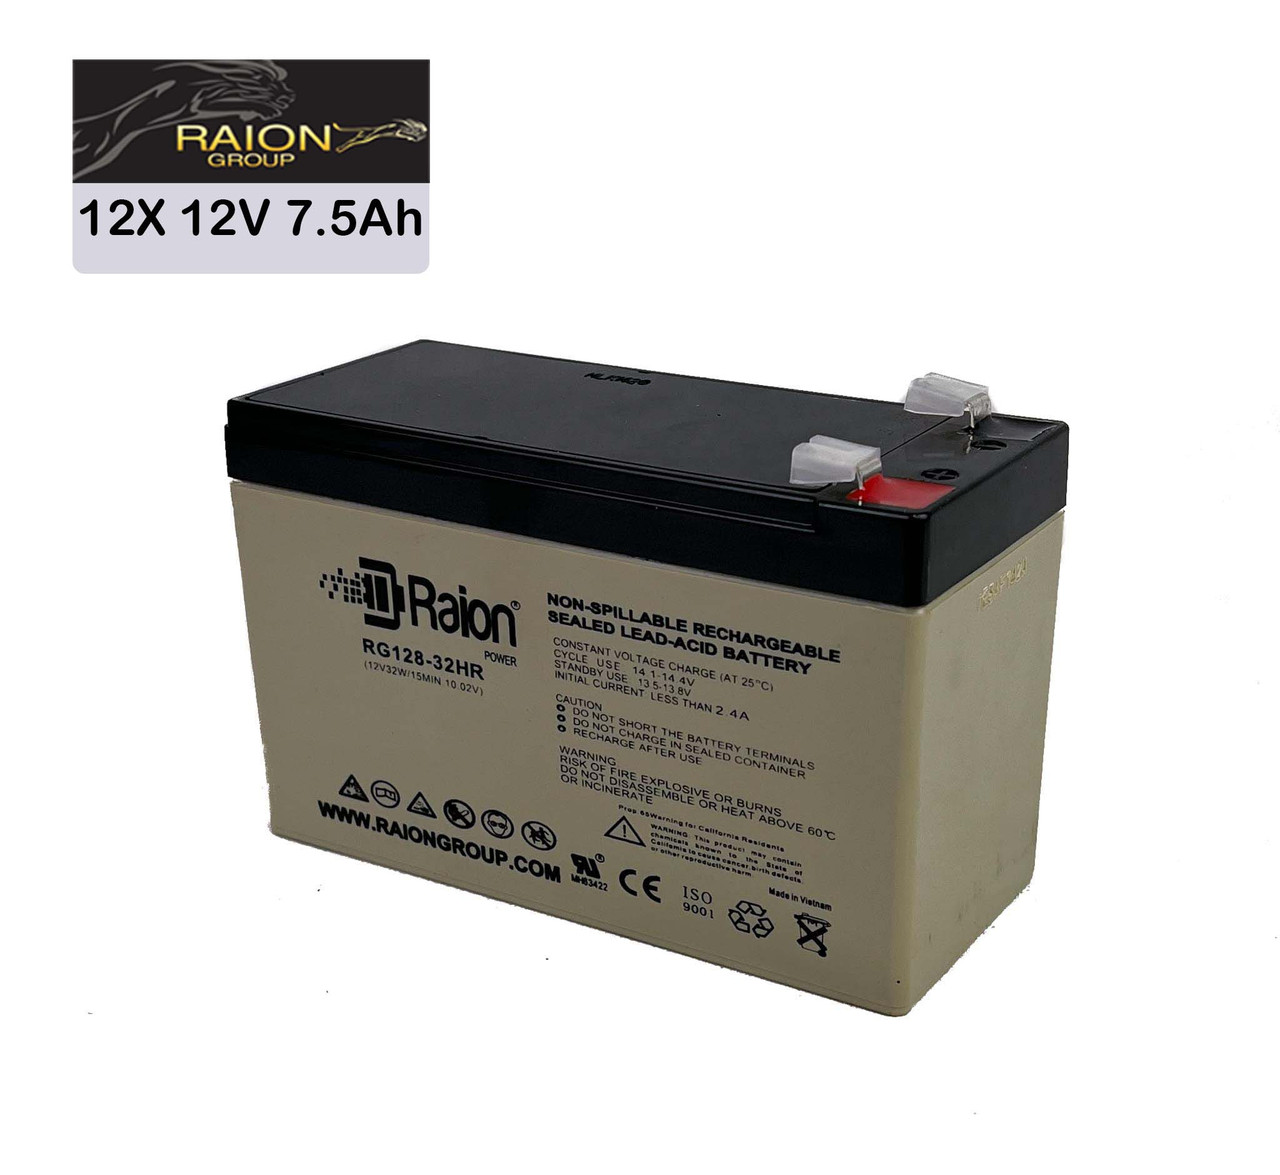 Raion Power 12V 7.5Ah High Rate Discharge UPS Batteries for MGE Pulsar Evolution 2200 - 12 Pack